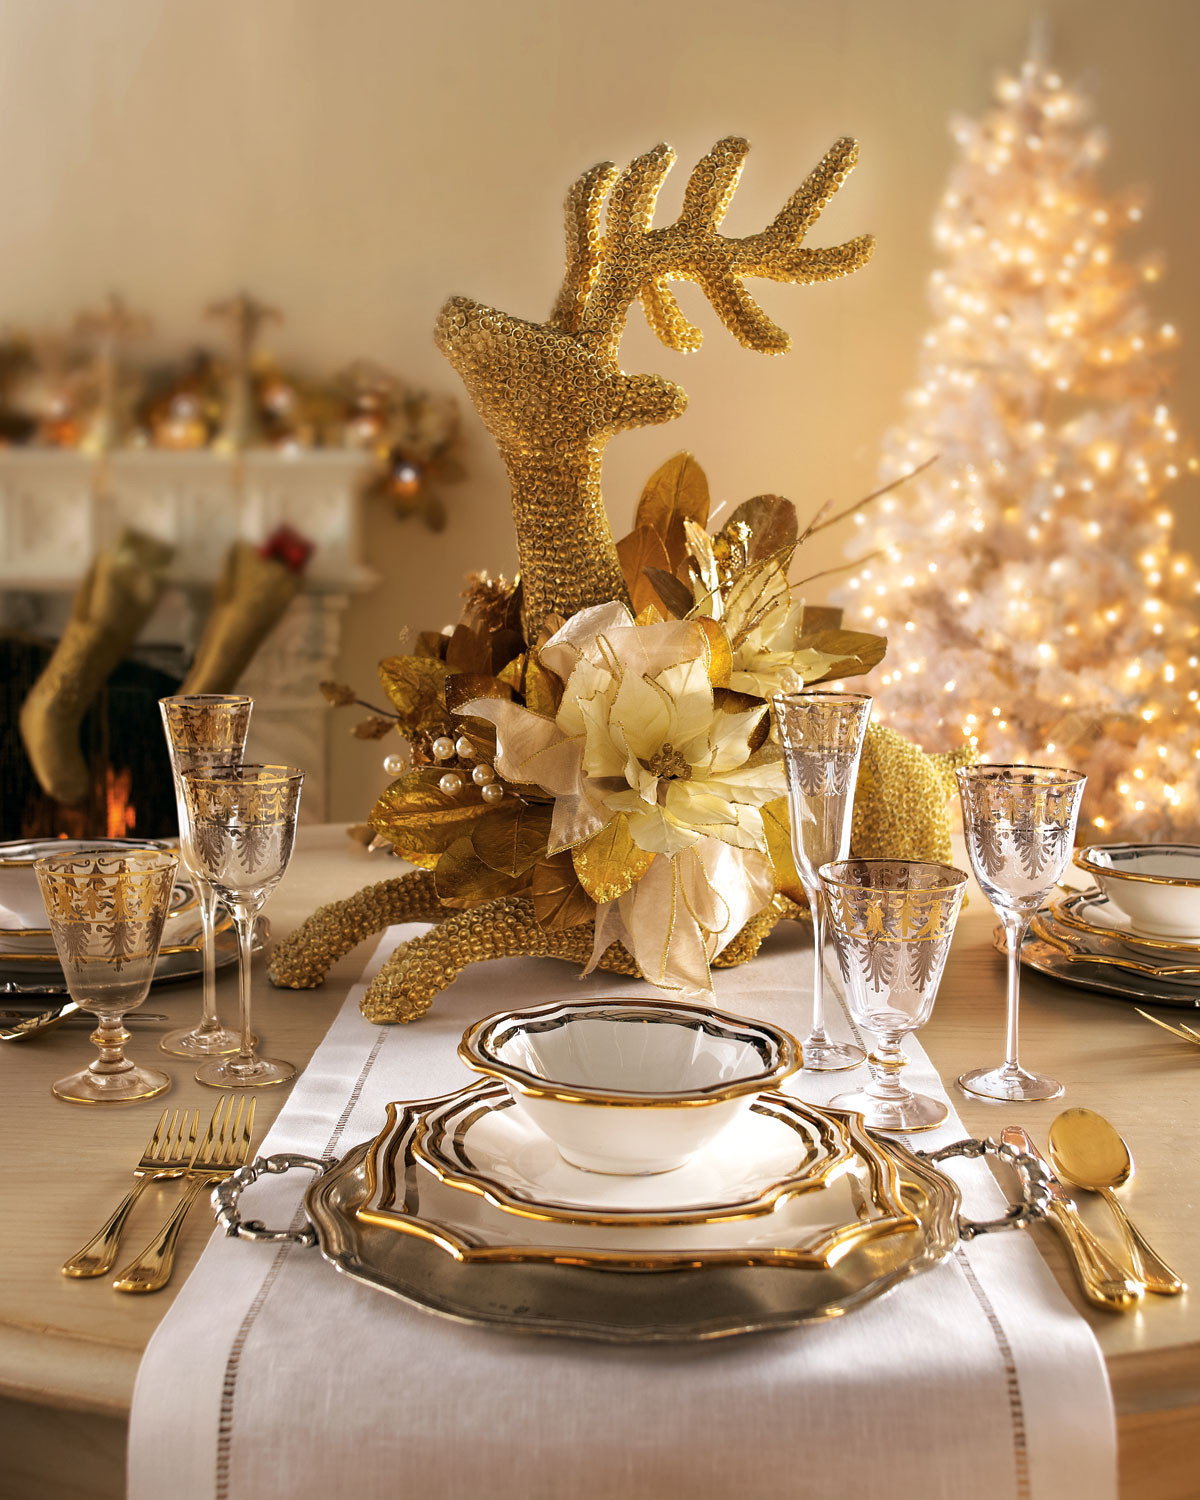 Elegant Christmas Table Settings Ideas
 A Golden Xmas